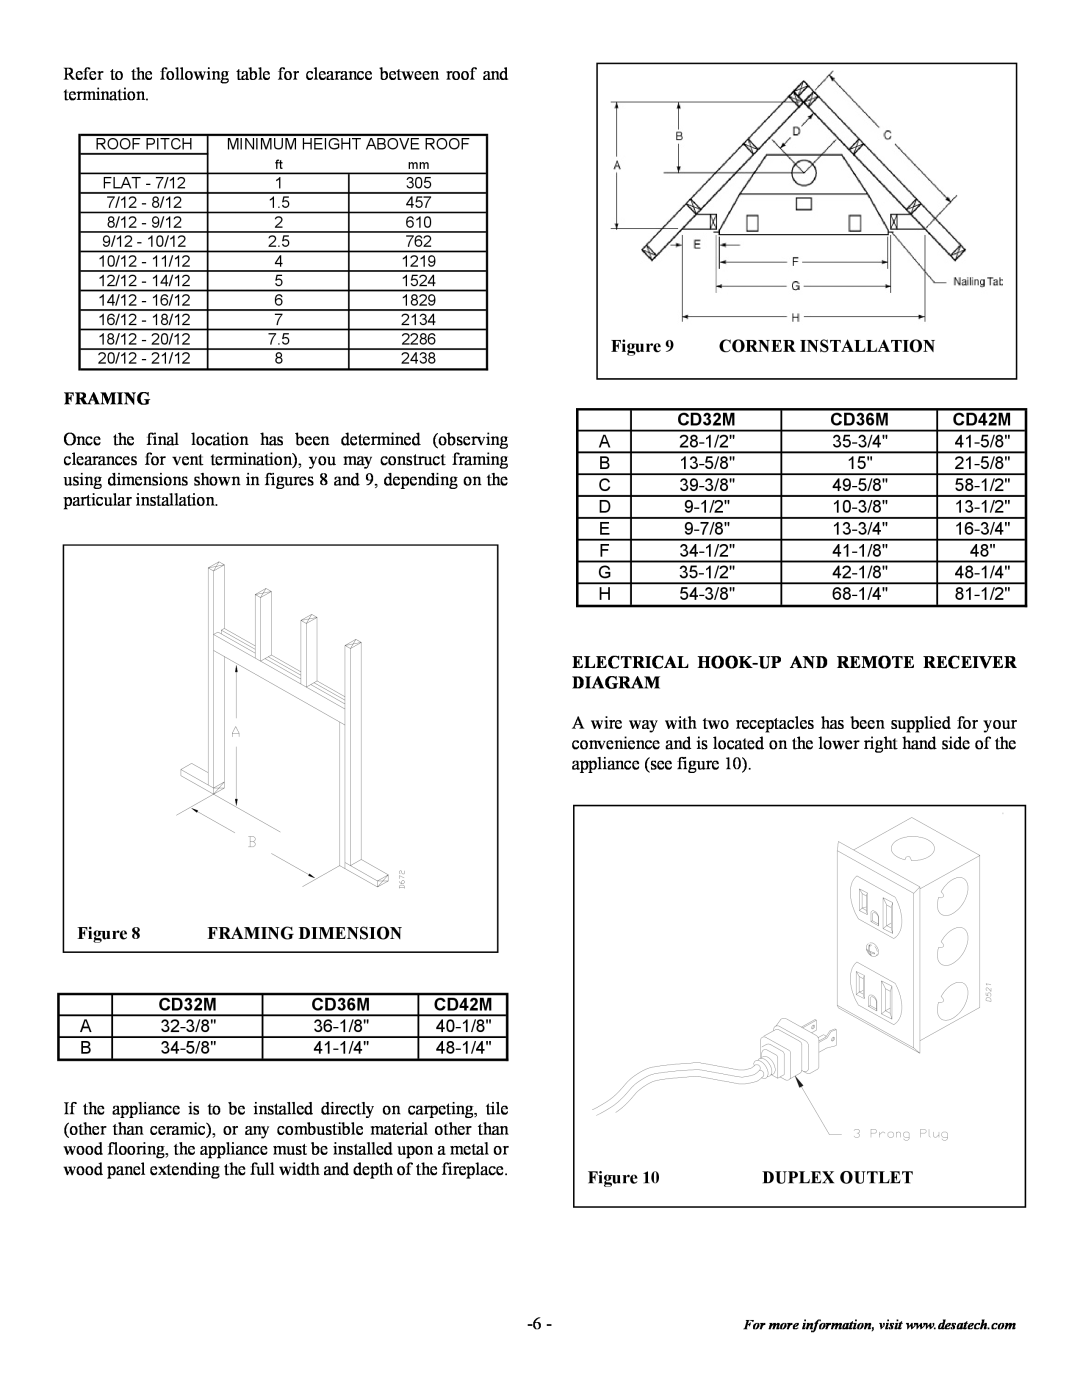 Desa CD42M Framing Dimension, CD32M, CD36M, Corner Installation, Electrical Hook-Upand Remote Receiver Diagram 